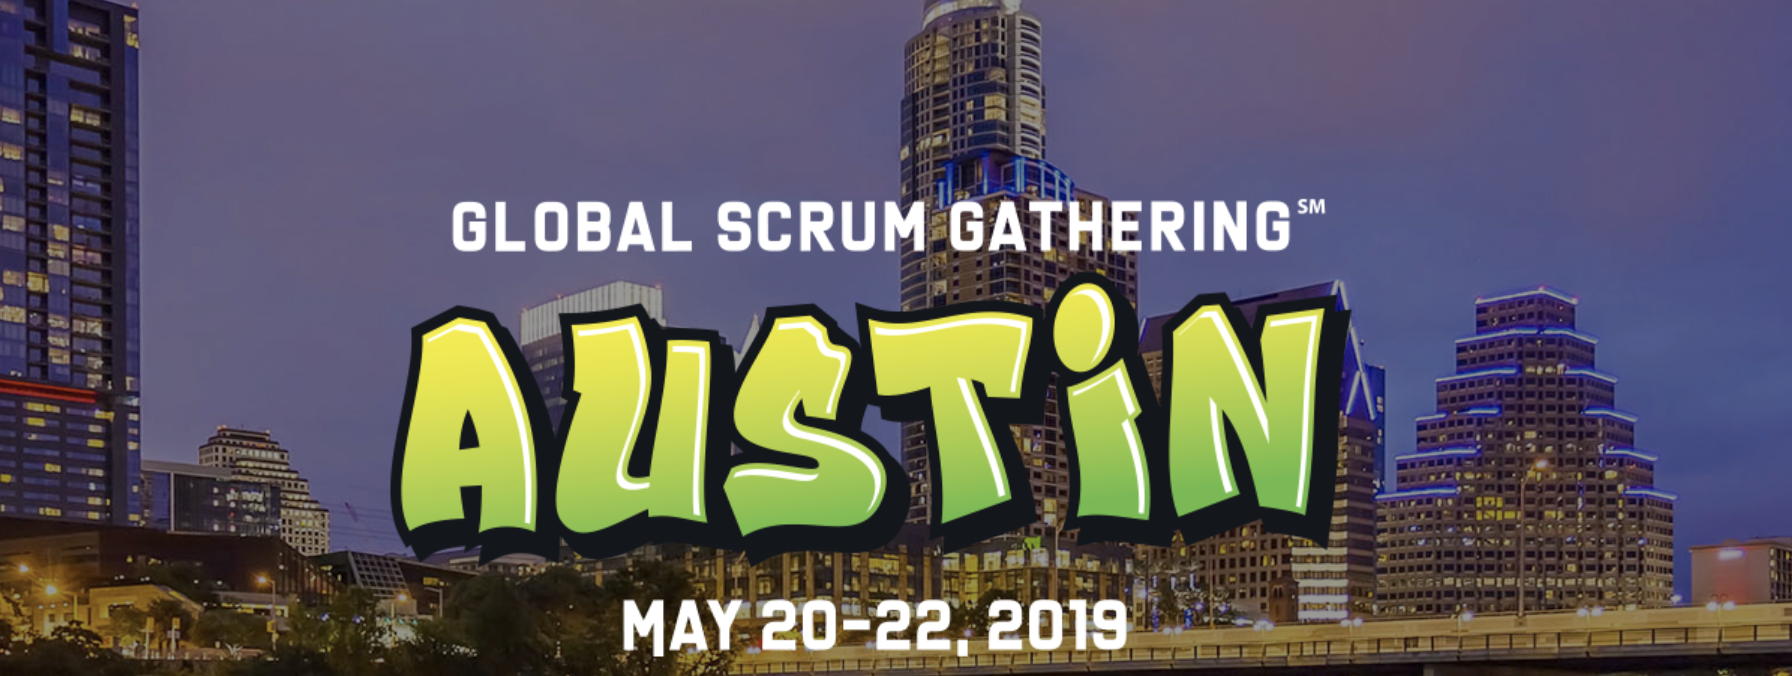 Global Scrum Gathering Austin 2019